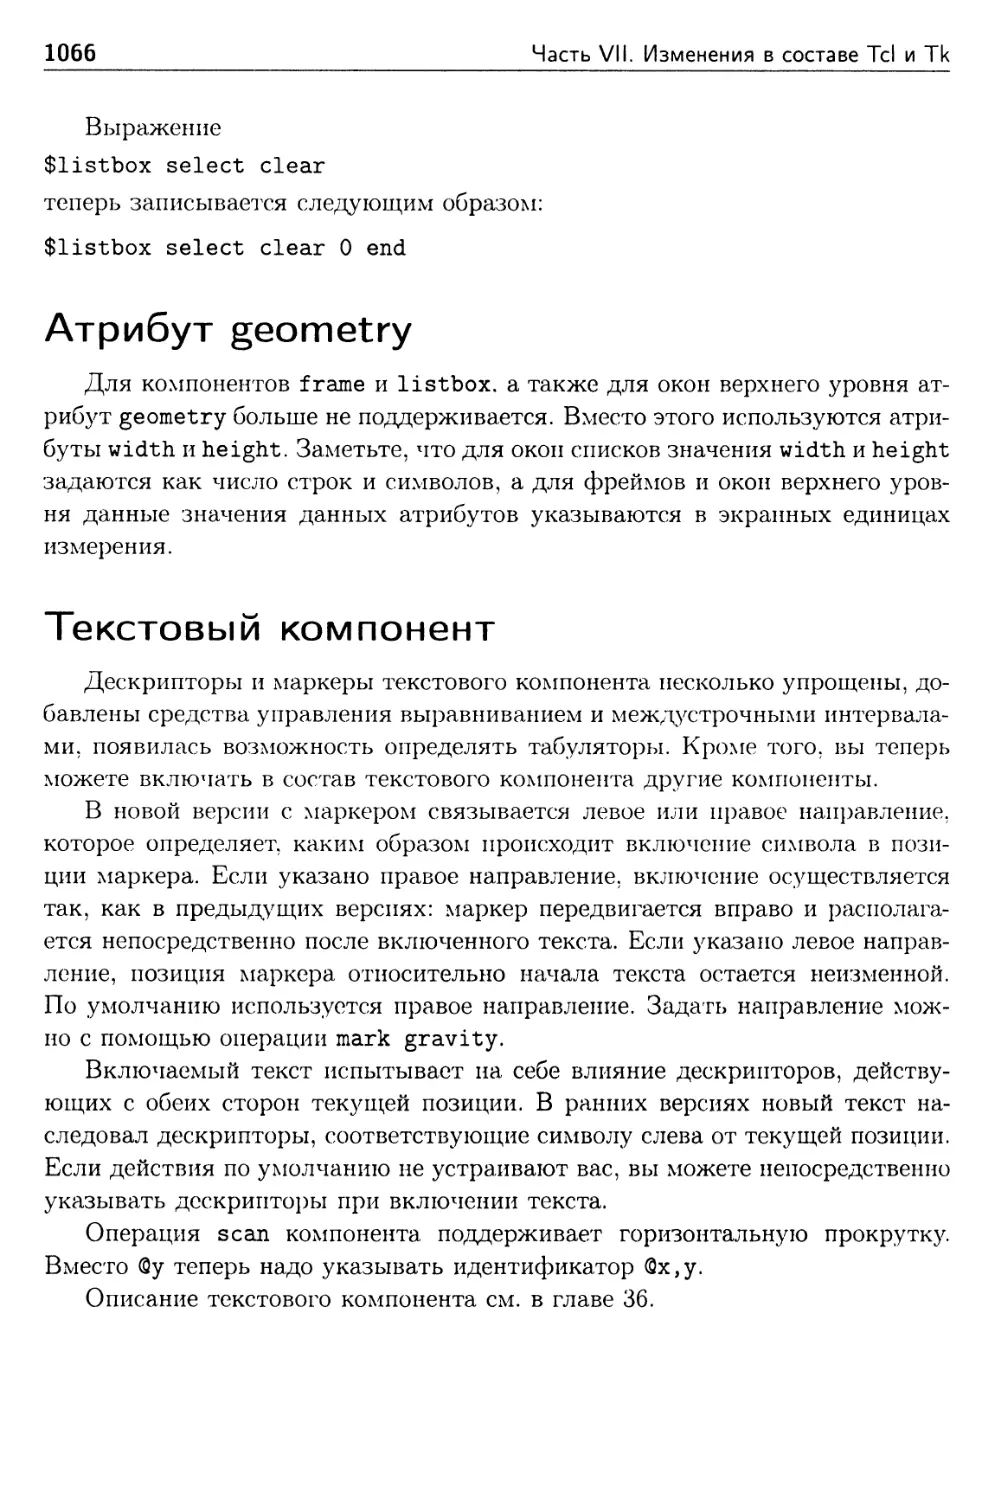 Атрибут geometry
Текстовый компонент